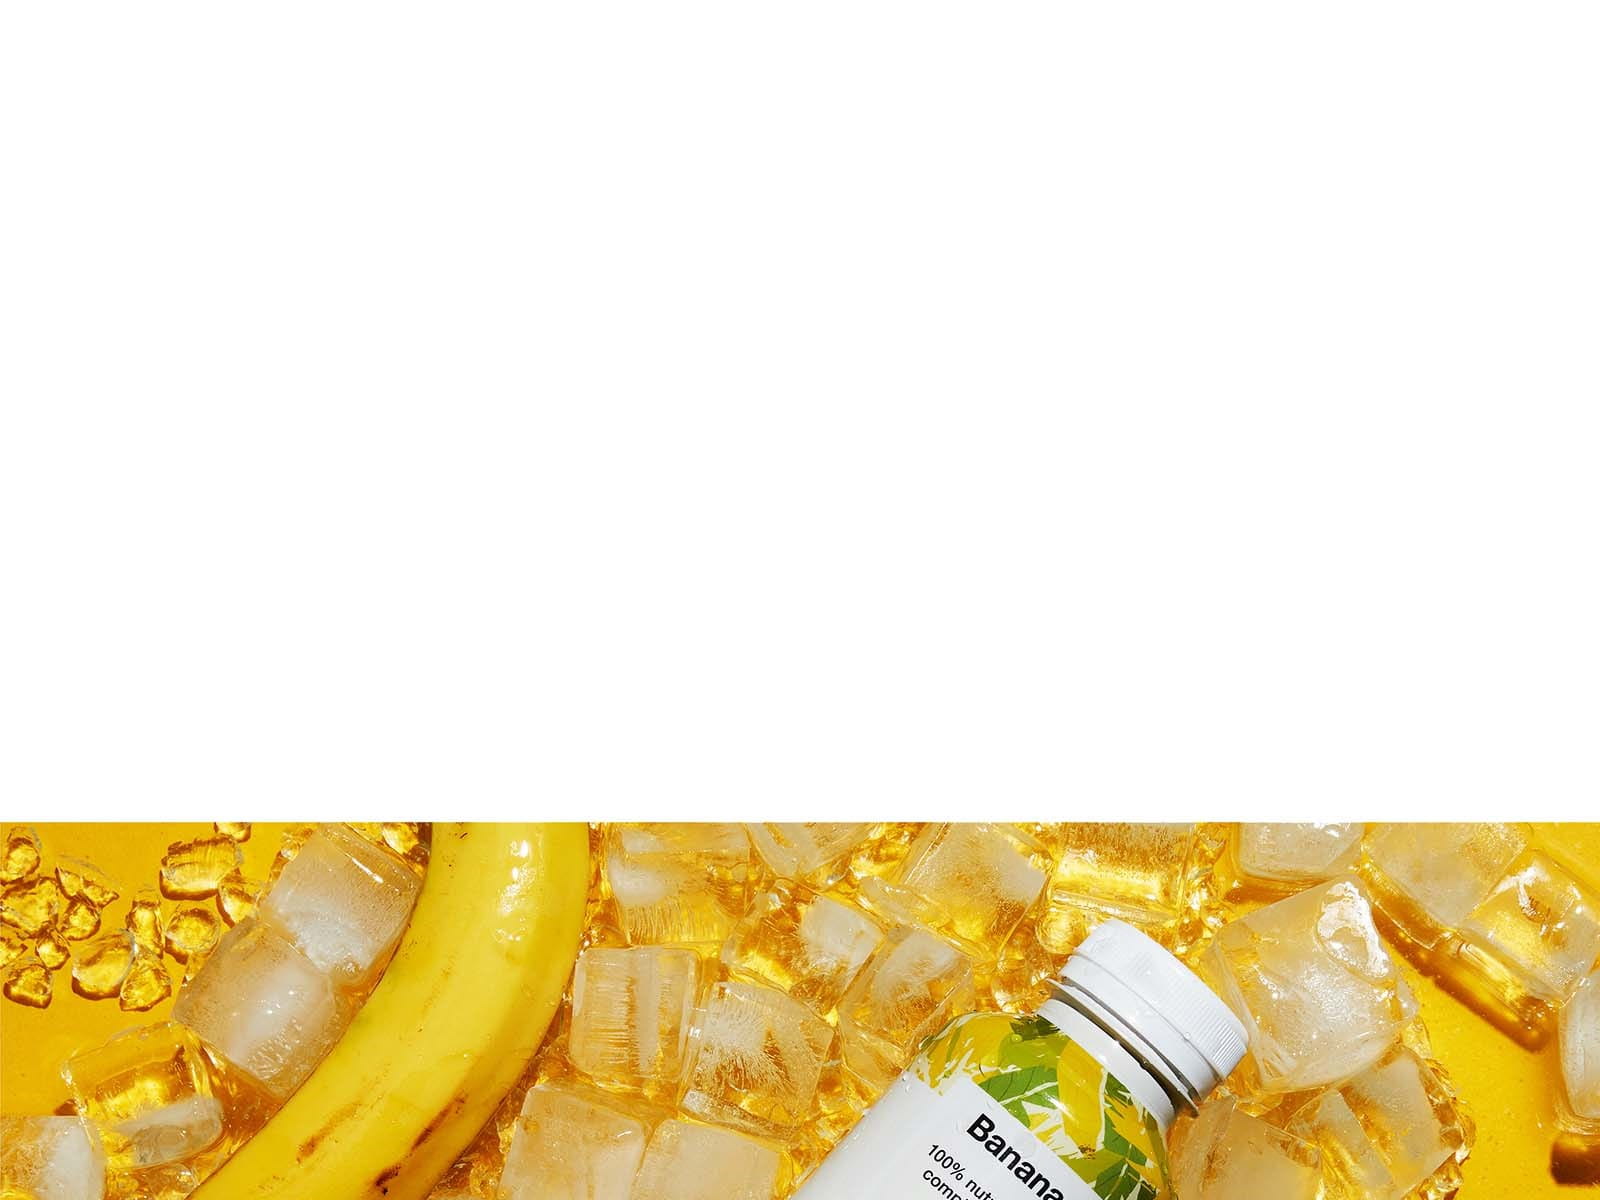 Huel shake bottle bananas eat fitter food drink businesses ICAEW Corporate Financier